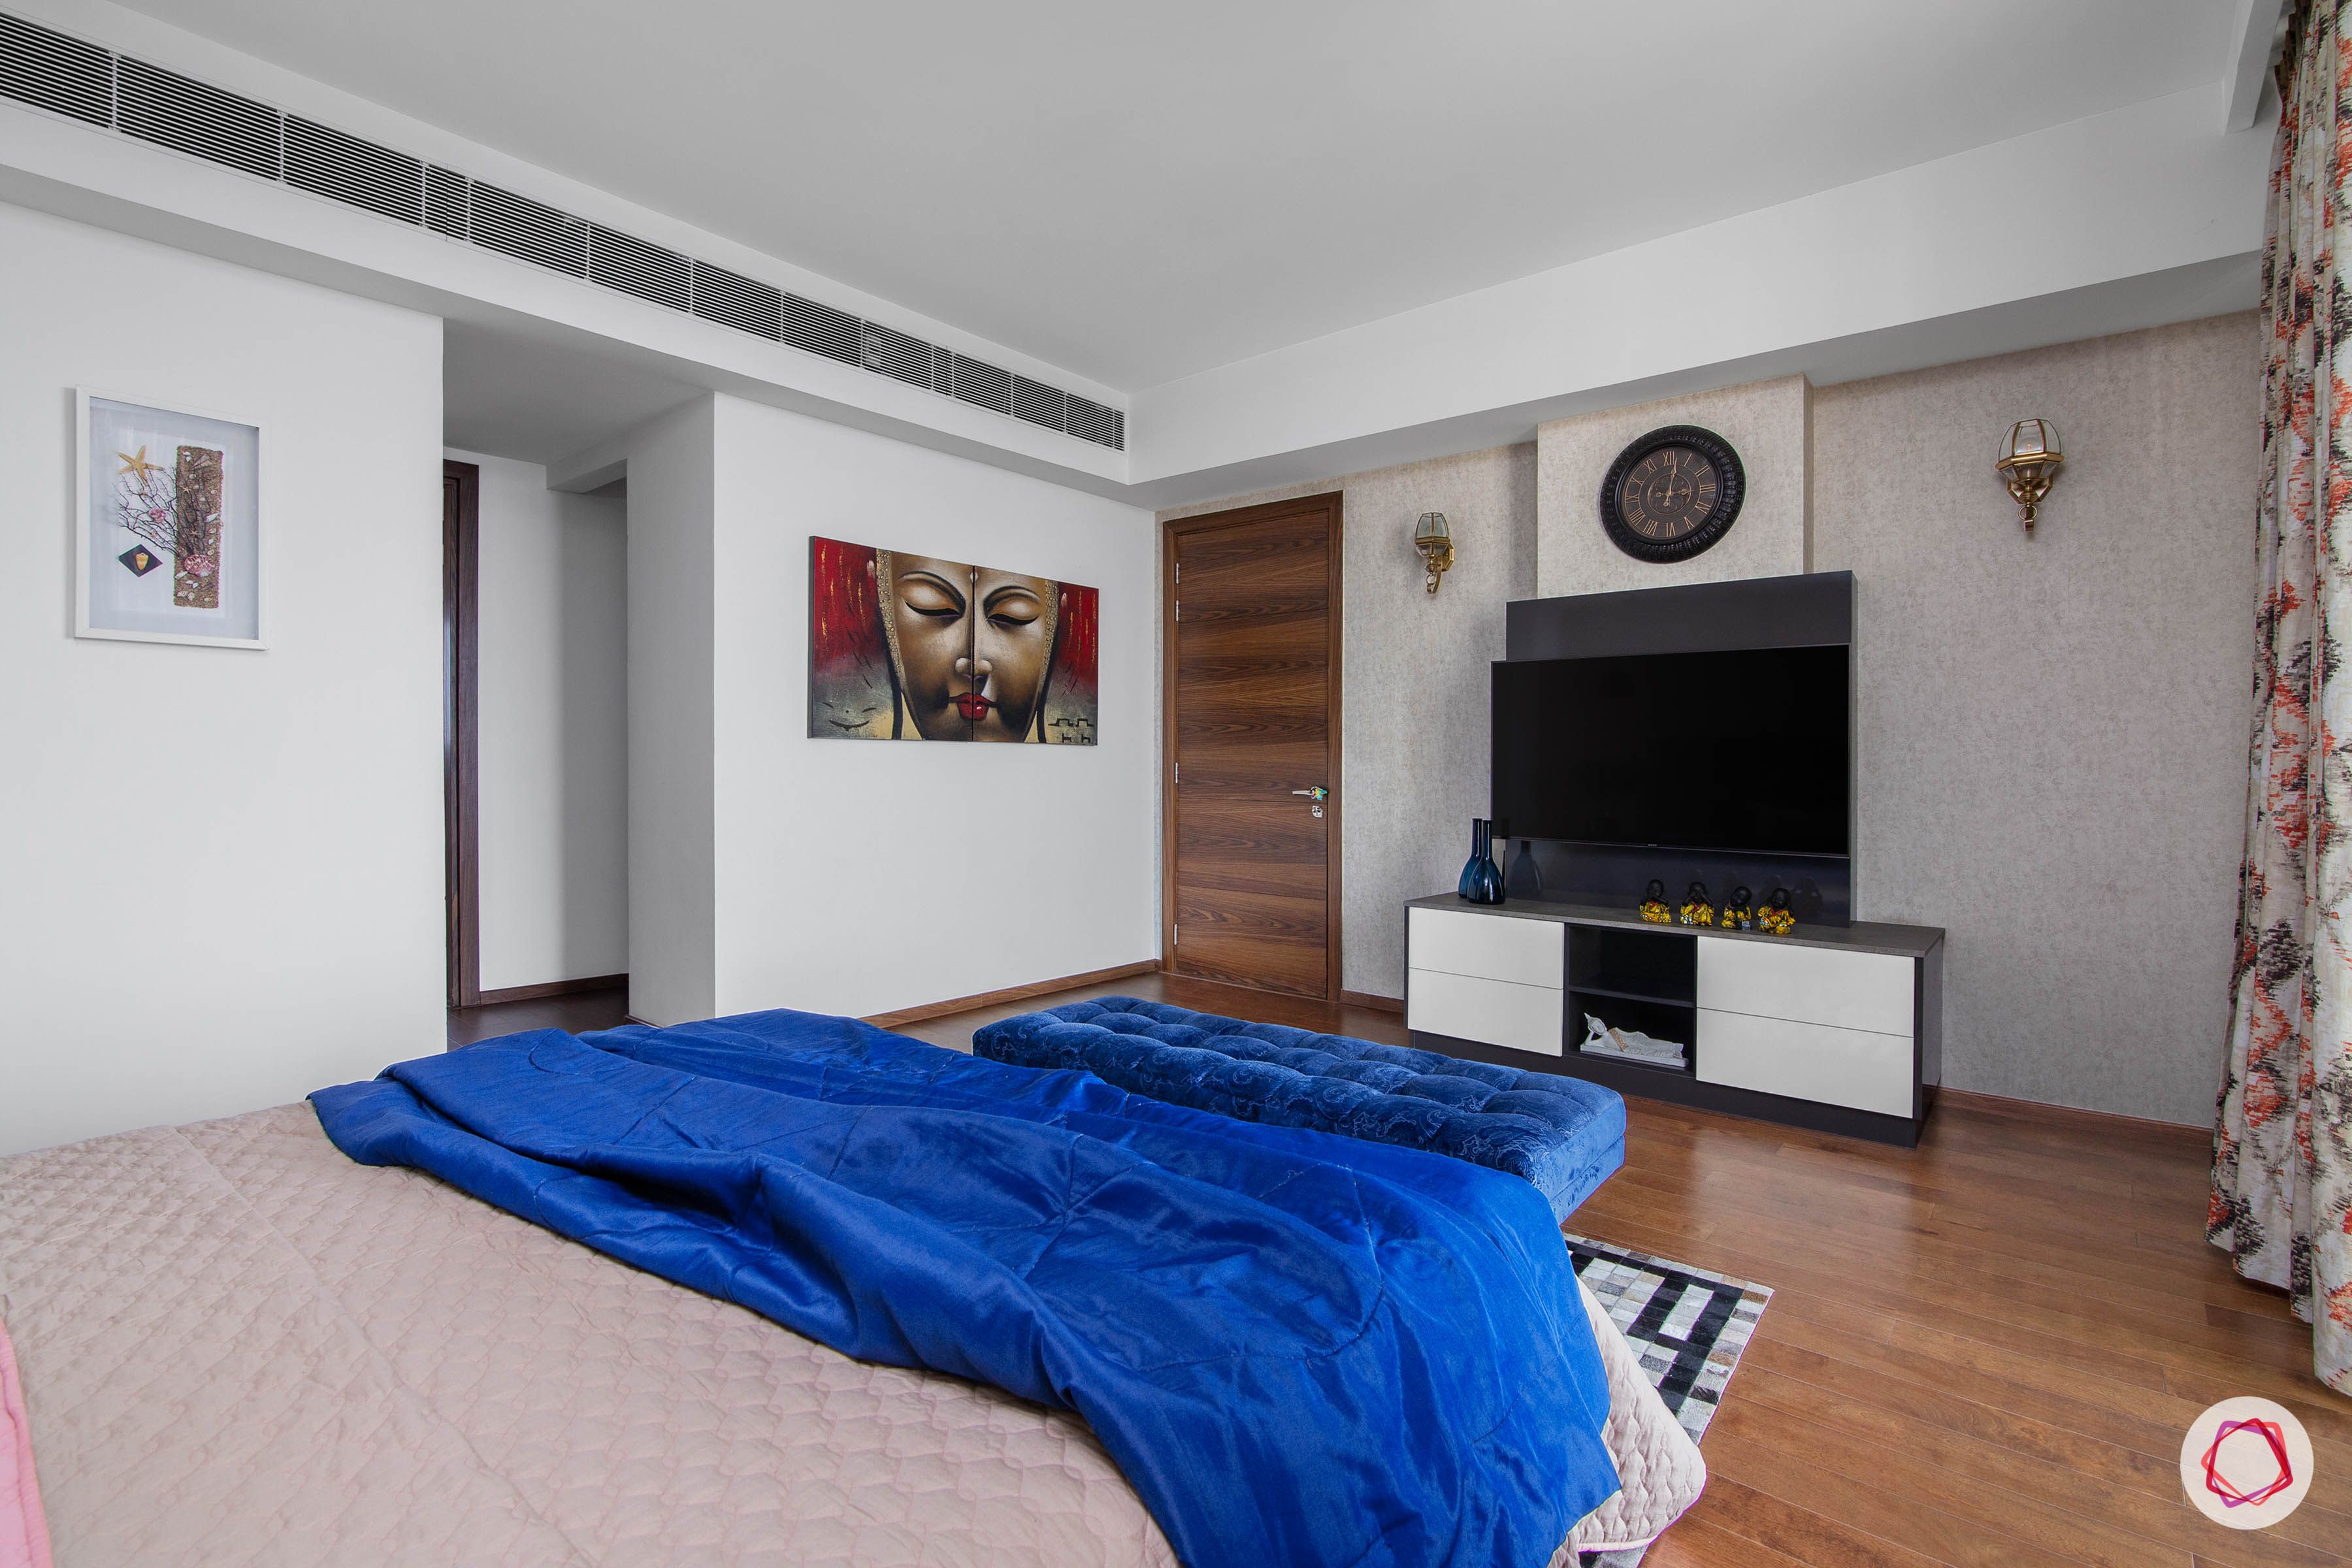 duplex house images-media wall ideas for bedroom-wooden flooring ideas-TV unit ideas